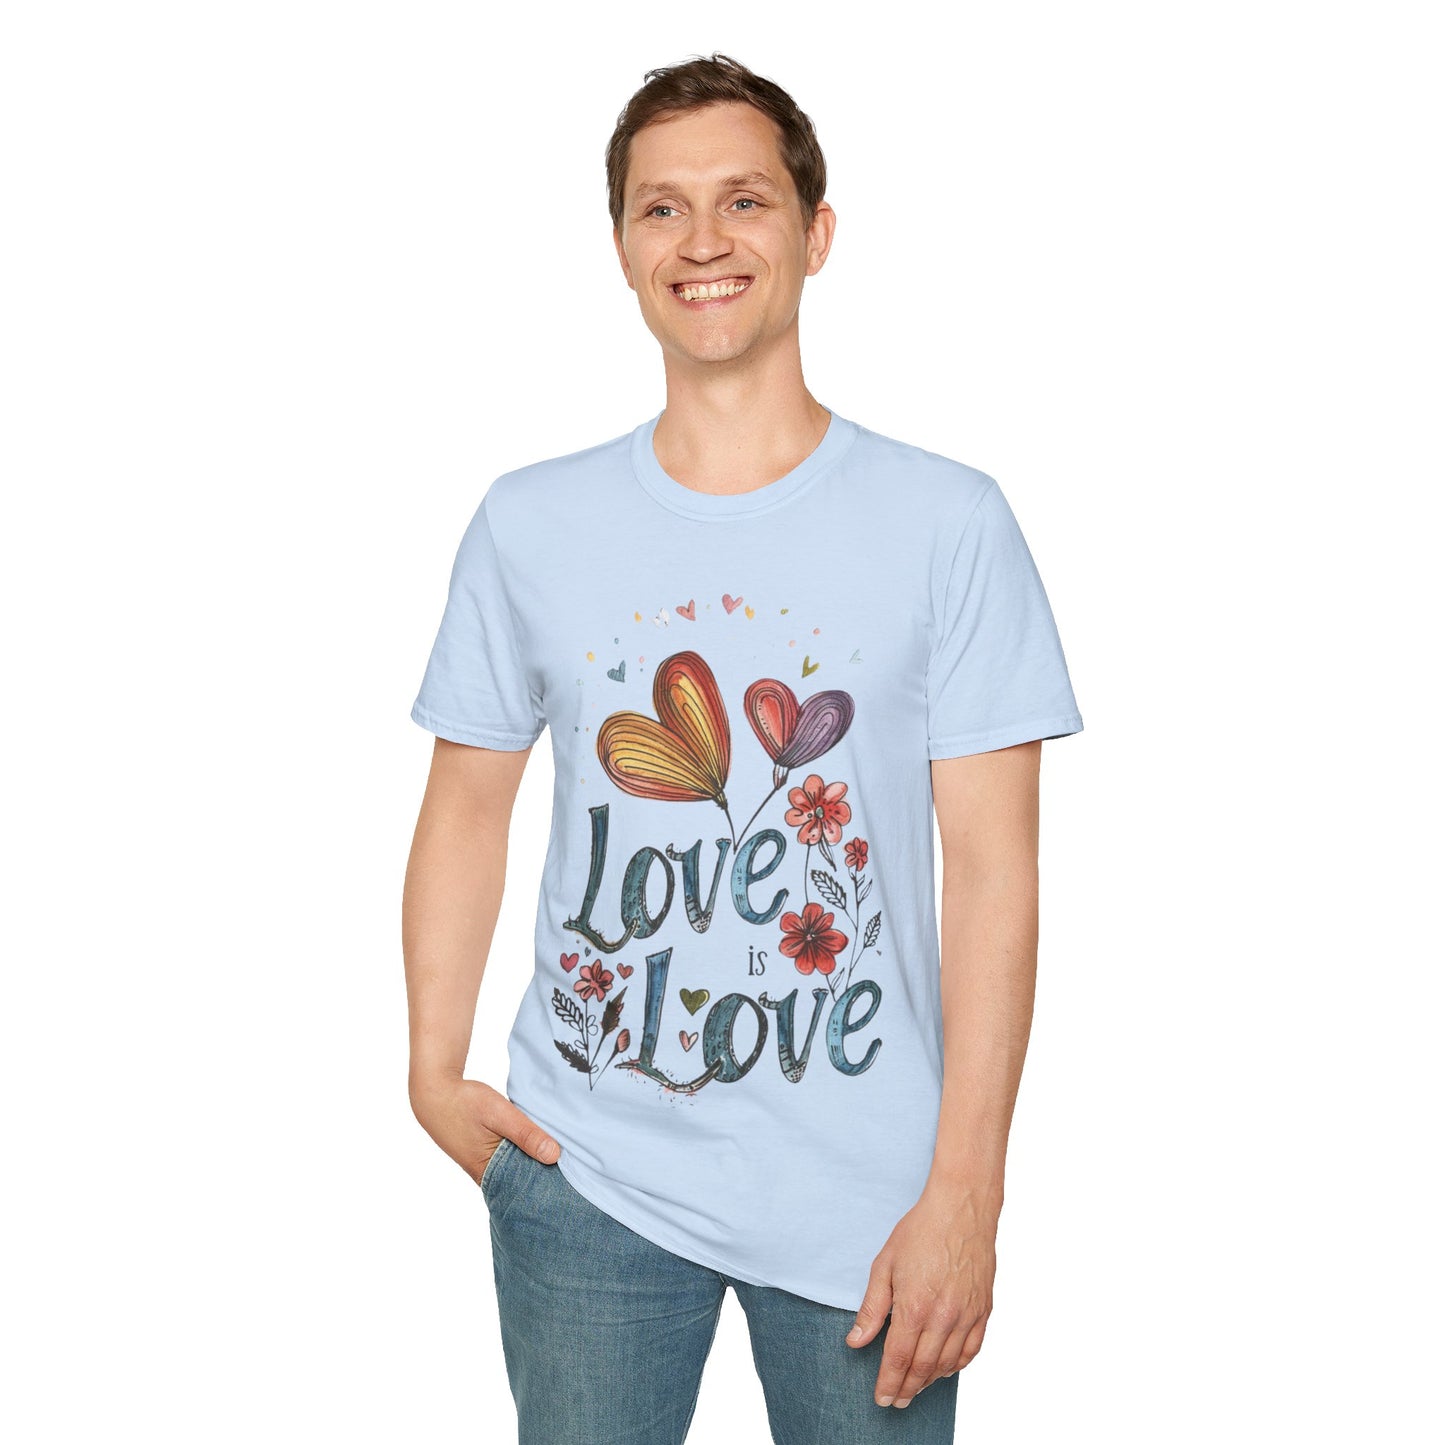 Love is Love Pride T-Shirt Statement Activist tshirt Defend Equality tee Activism Protest Liberal shirt Leftist Cute t shirt Vote